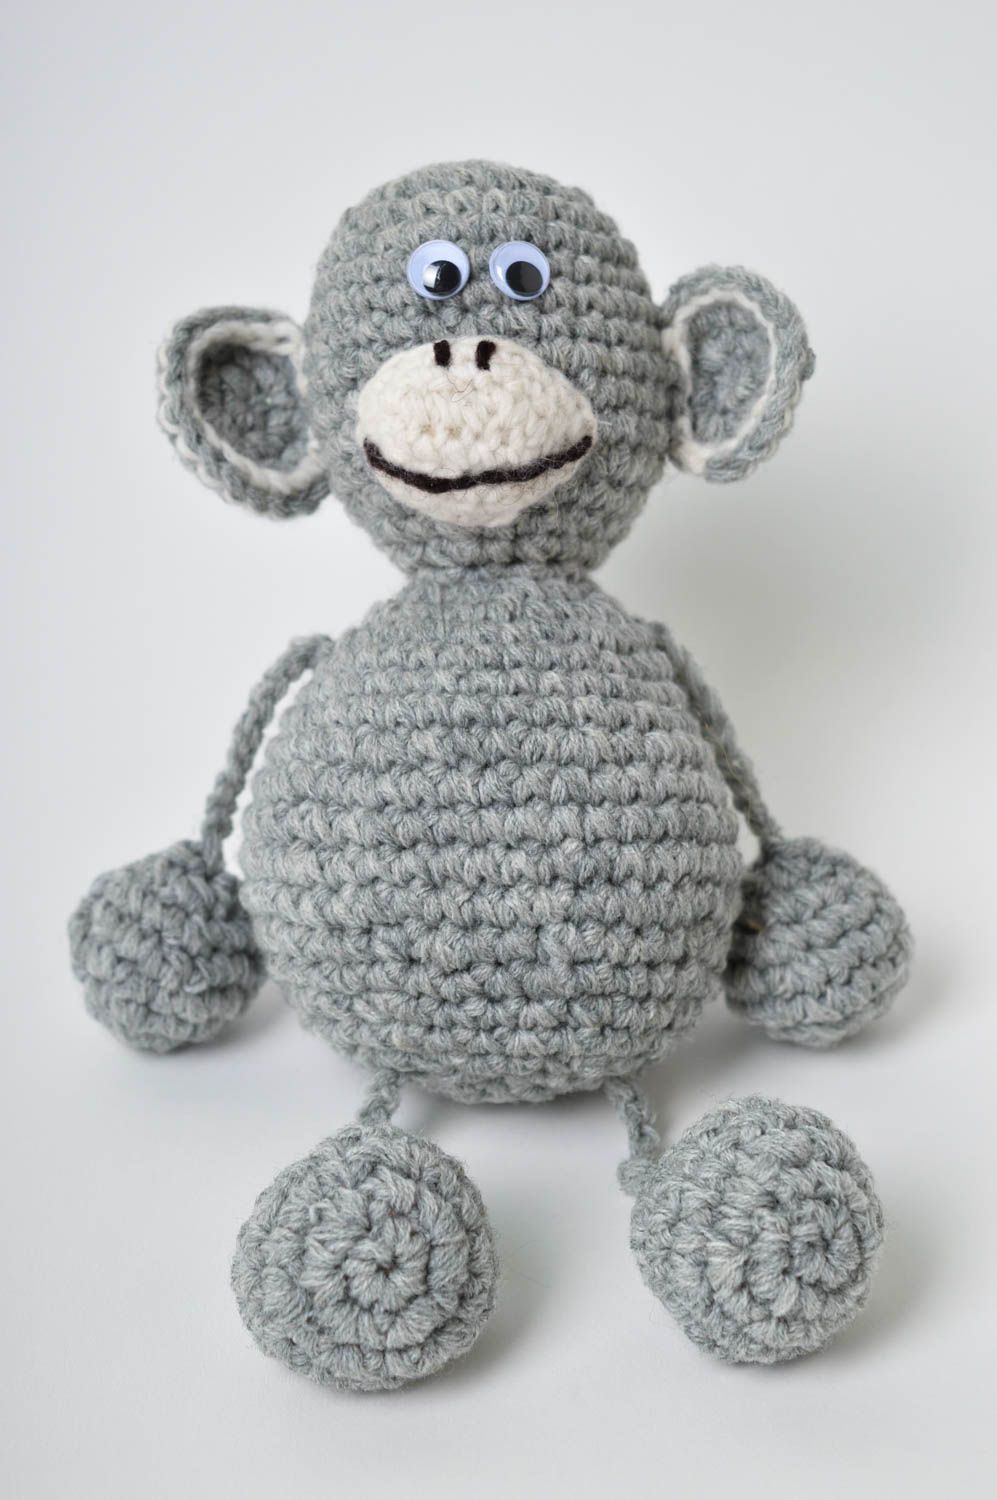 Crocheted toy stuffed toy handmade soft toys for children nursery decor photo 2